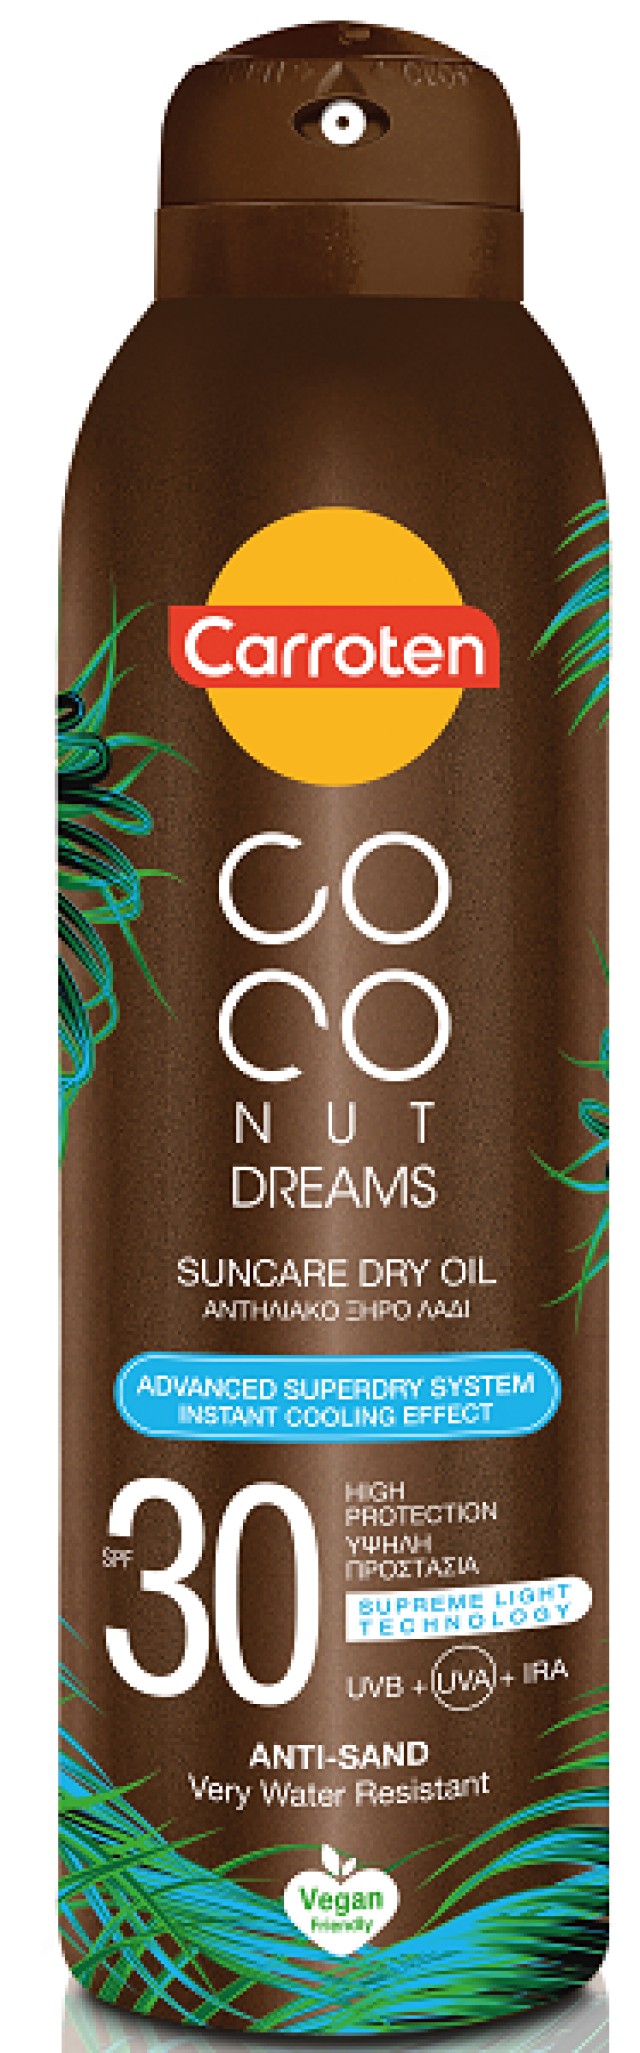 Carroten Oil Coconut Dreams Easy Spray SPF30 150ml